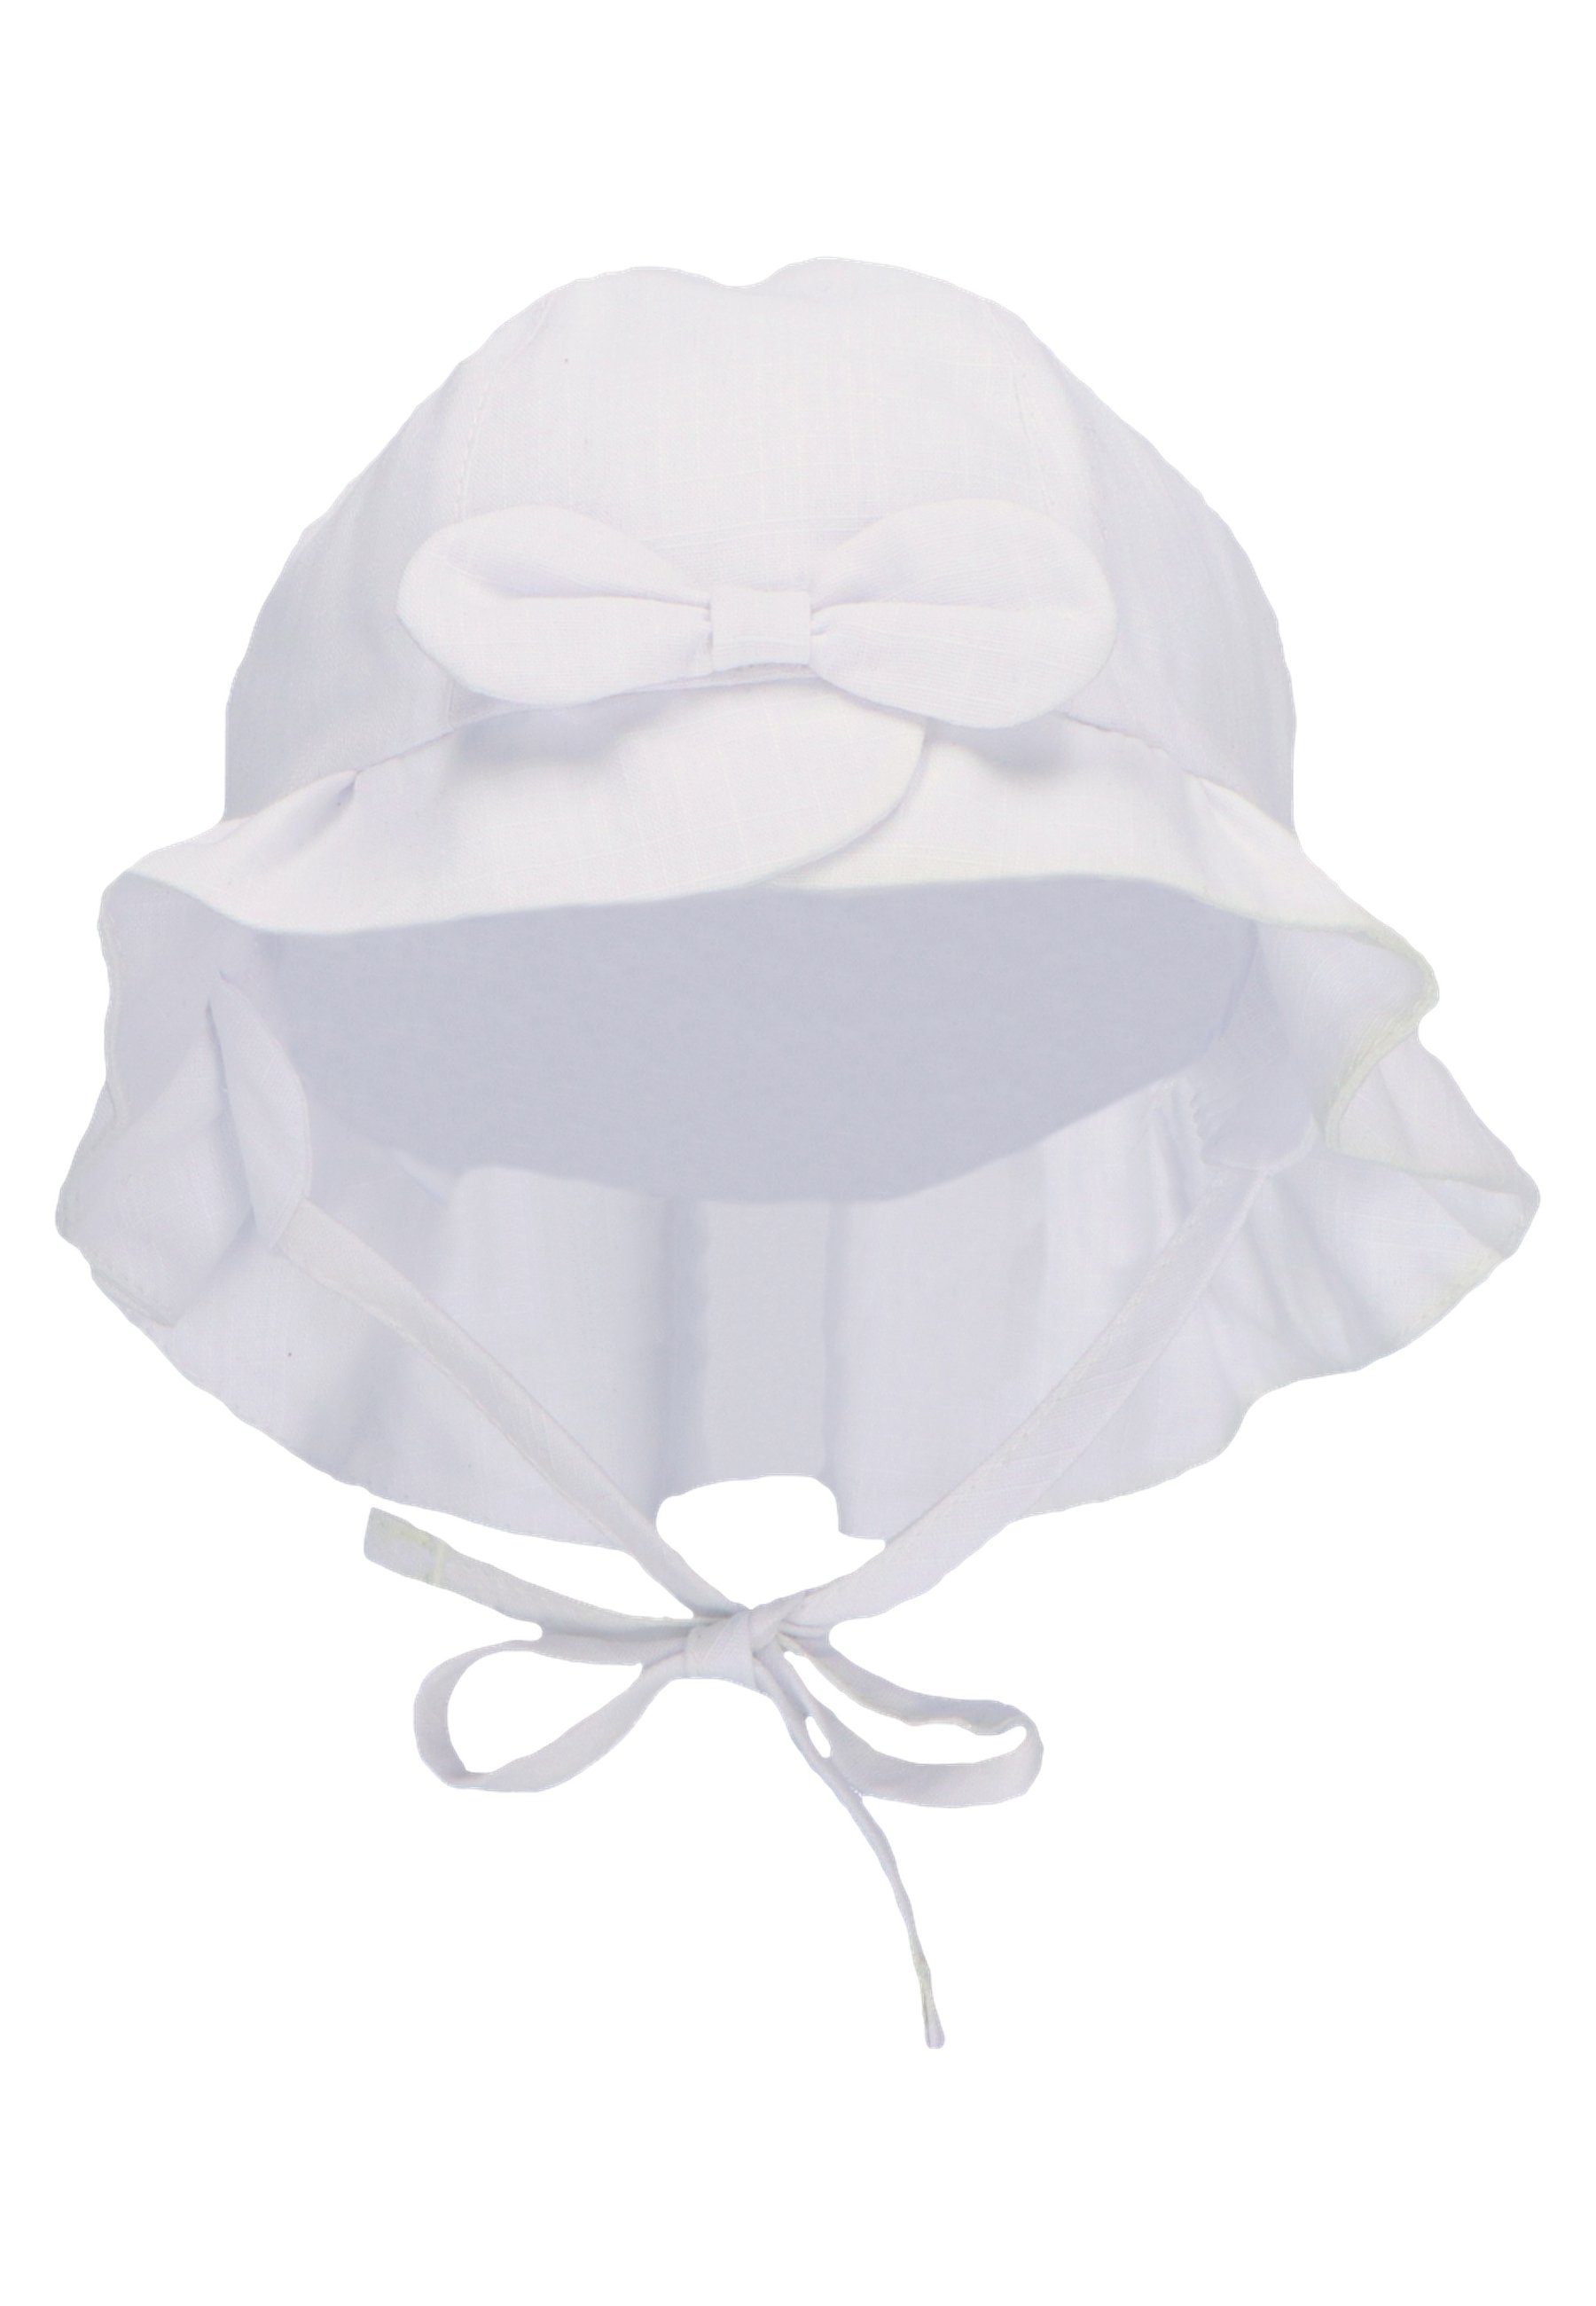 (1-St) Ballonmütze Hut Sterntaler® weiß Leinencharakter